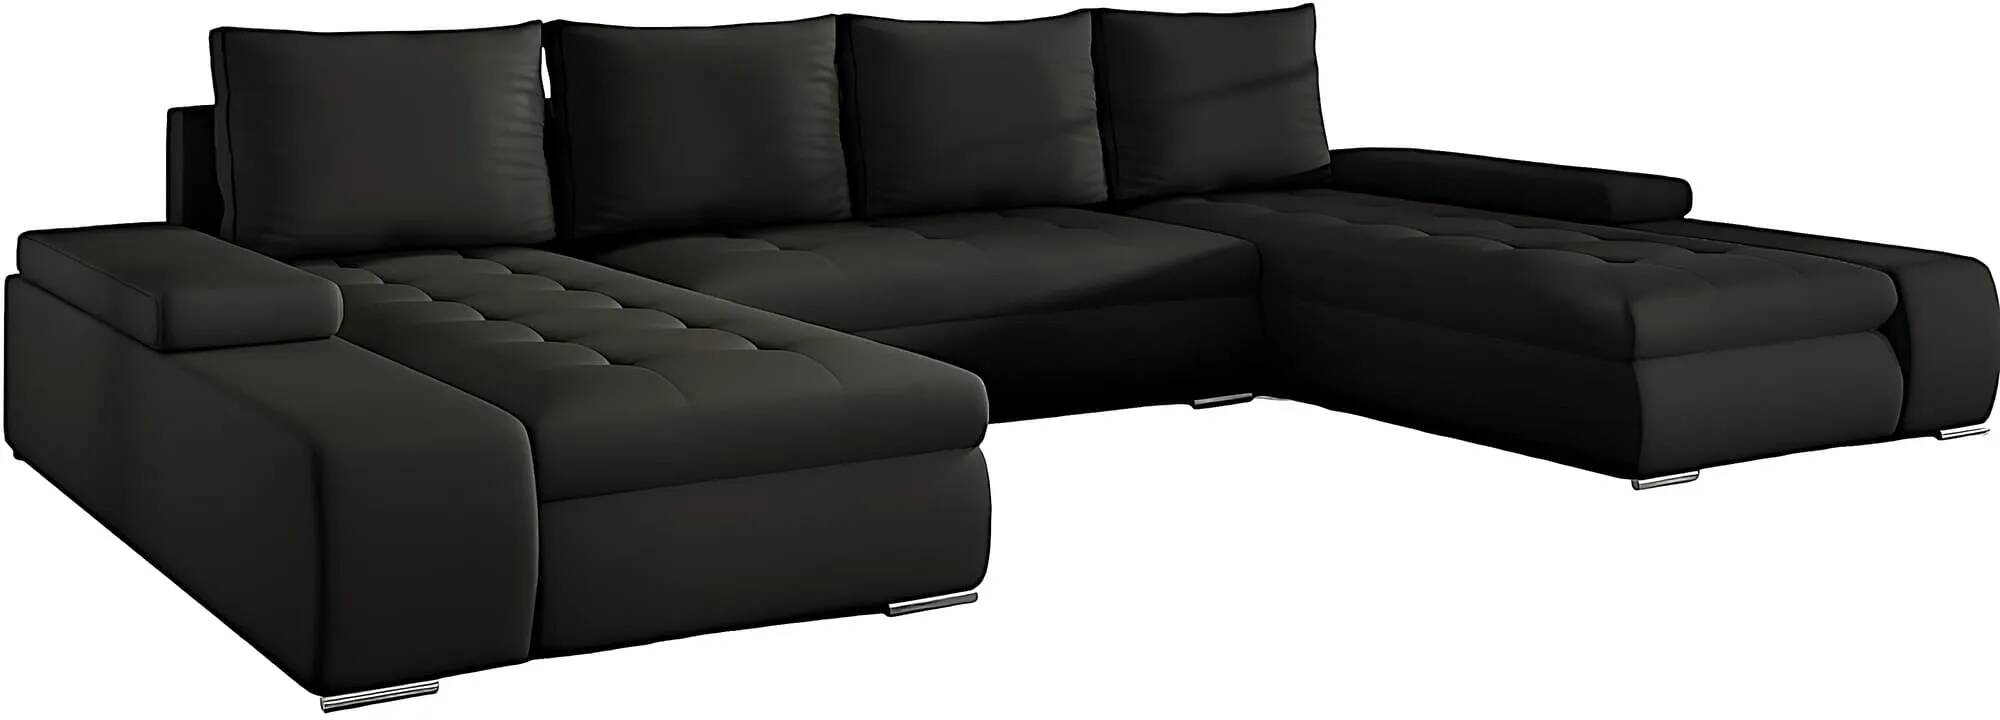 Canapé d'angle convertible en simili cuir noir